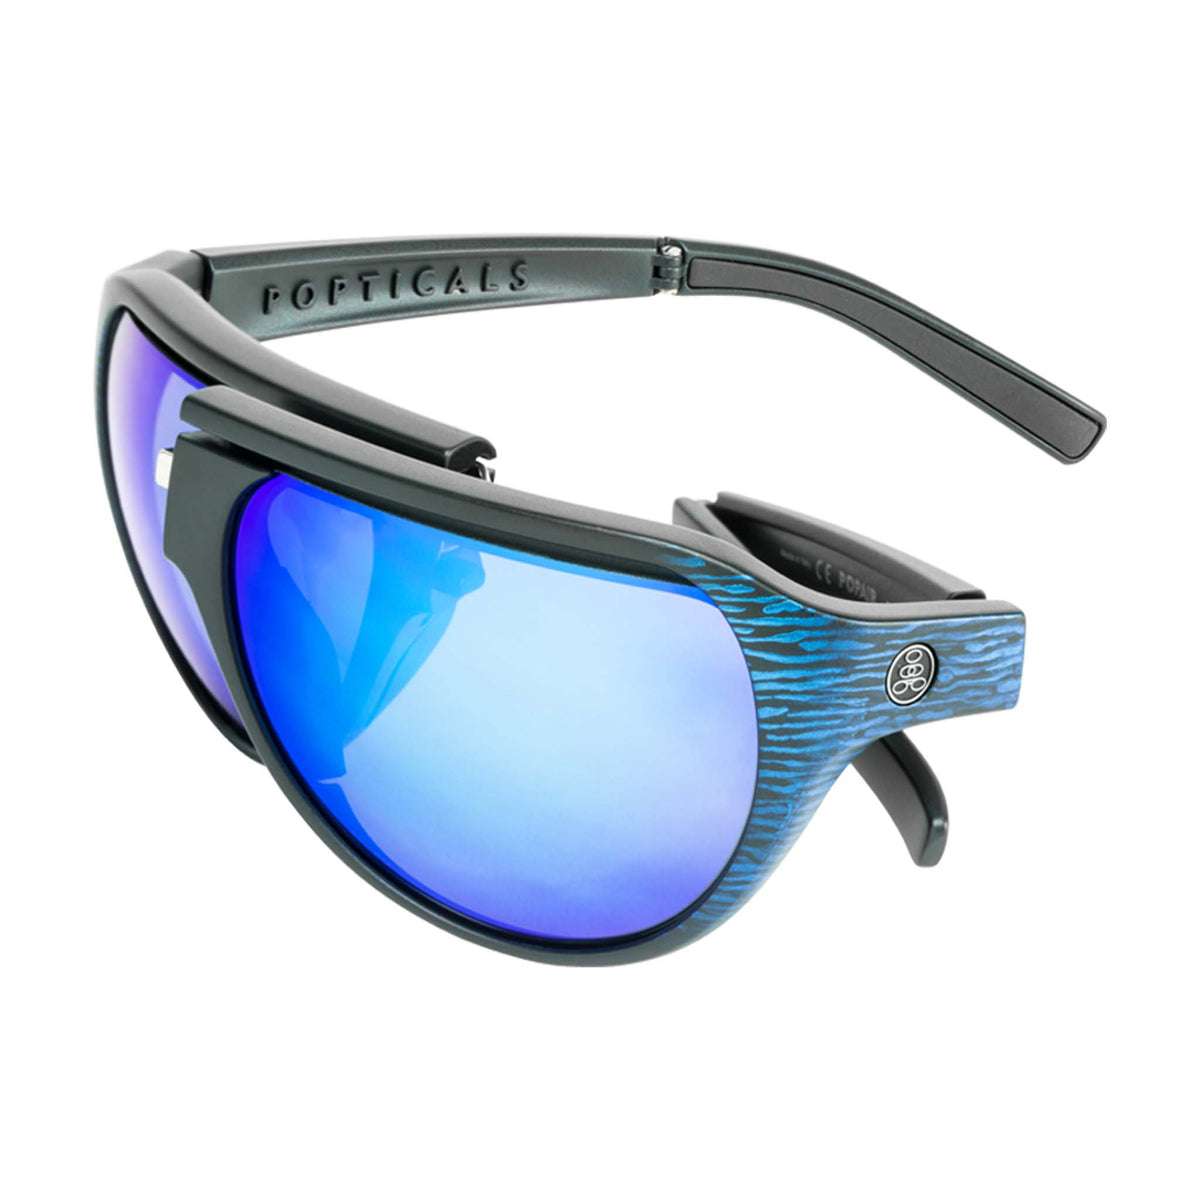 Popticals, Premium Compact Sunglasses, PopAir, 300010-EUUN, Polarized Sunglasses, Matte Blue/Black Wood Grain Frame, Blue Mirror Lenses, Spider View